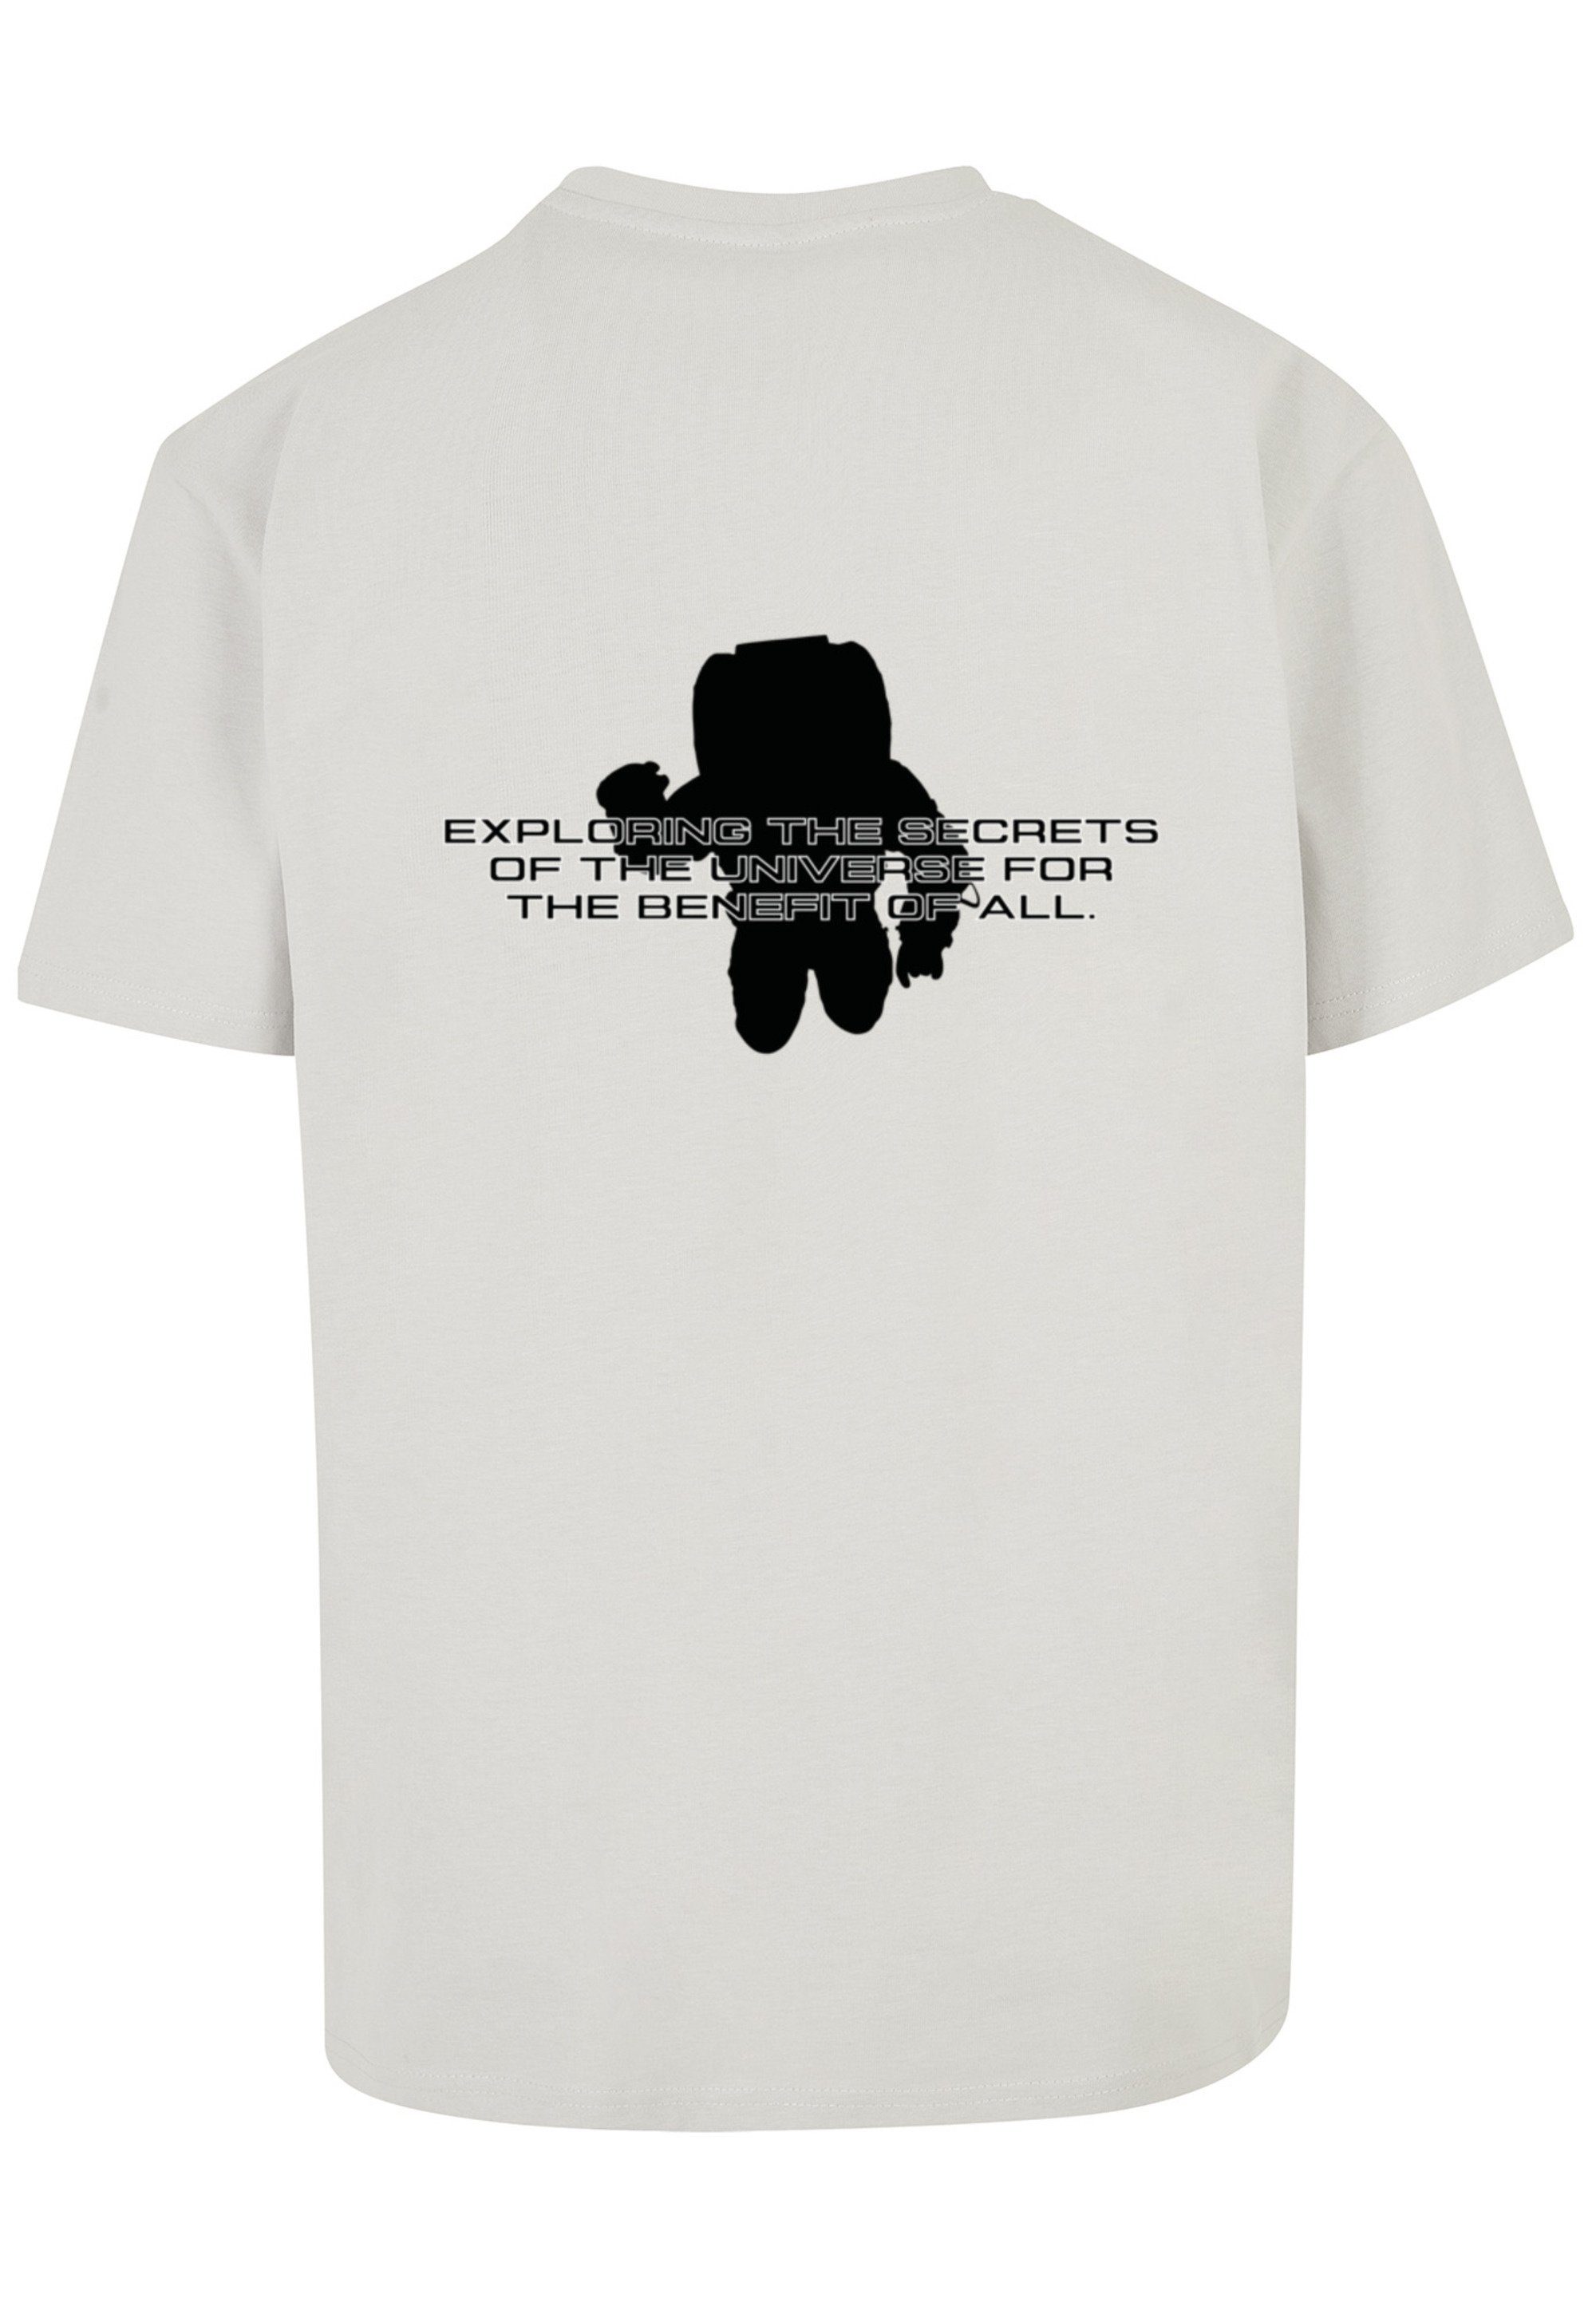 F4NT4STIC T-Shirt NASA worm lightasphalt Print